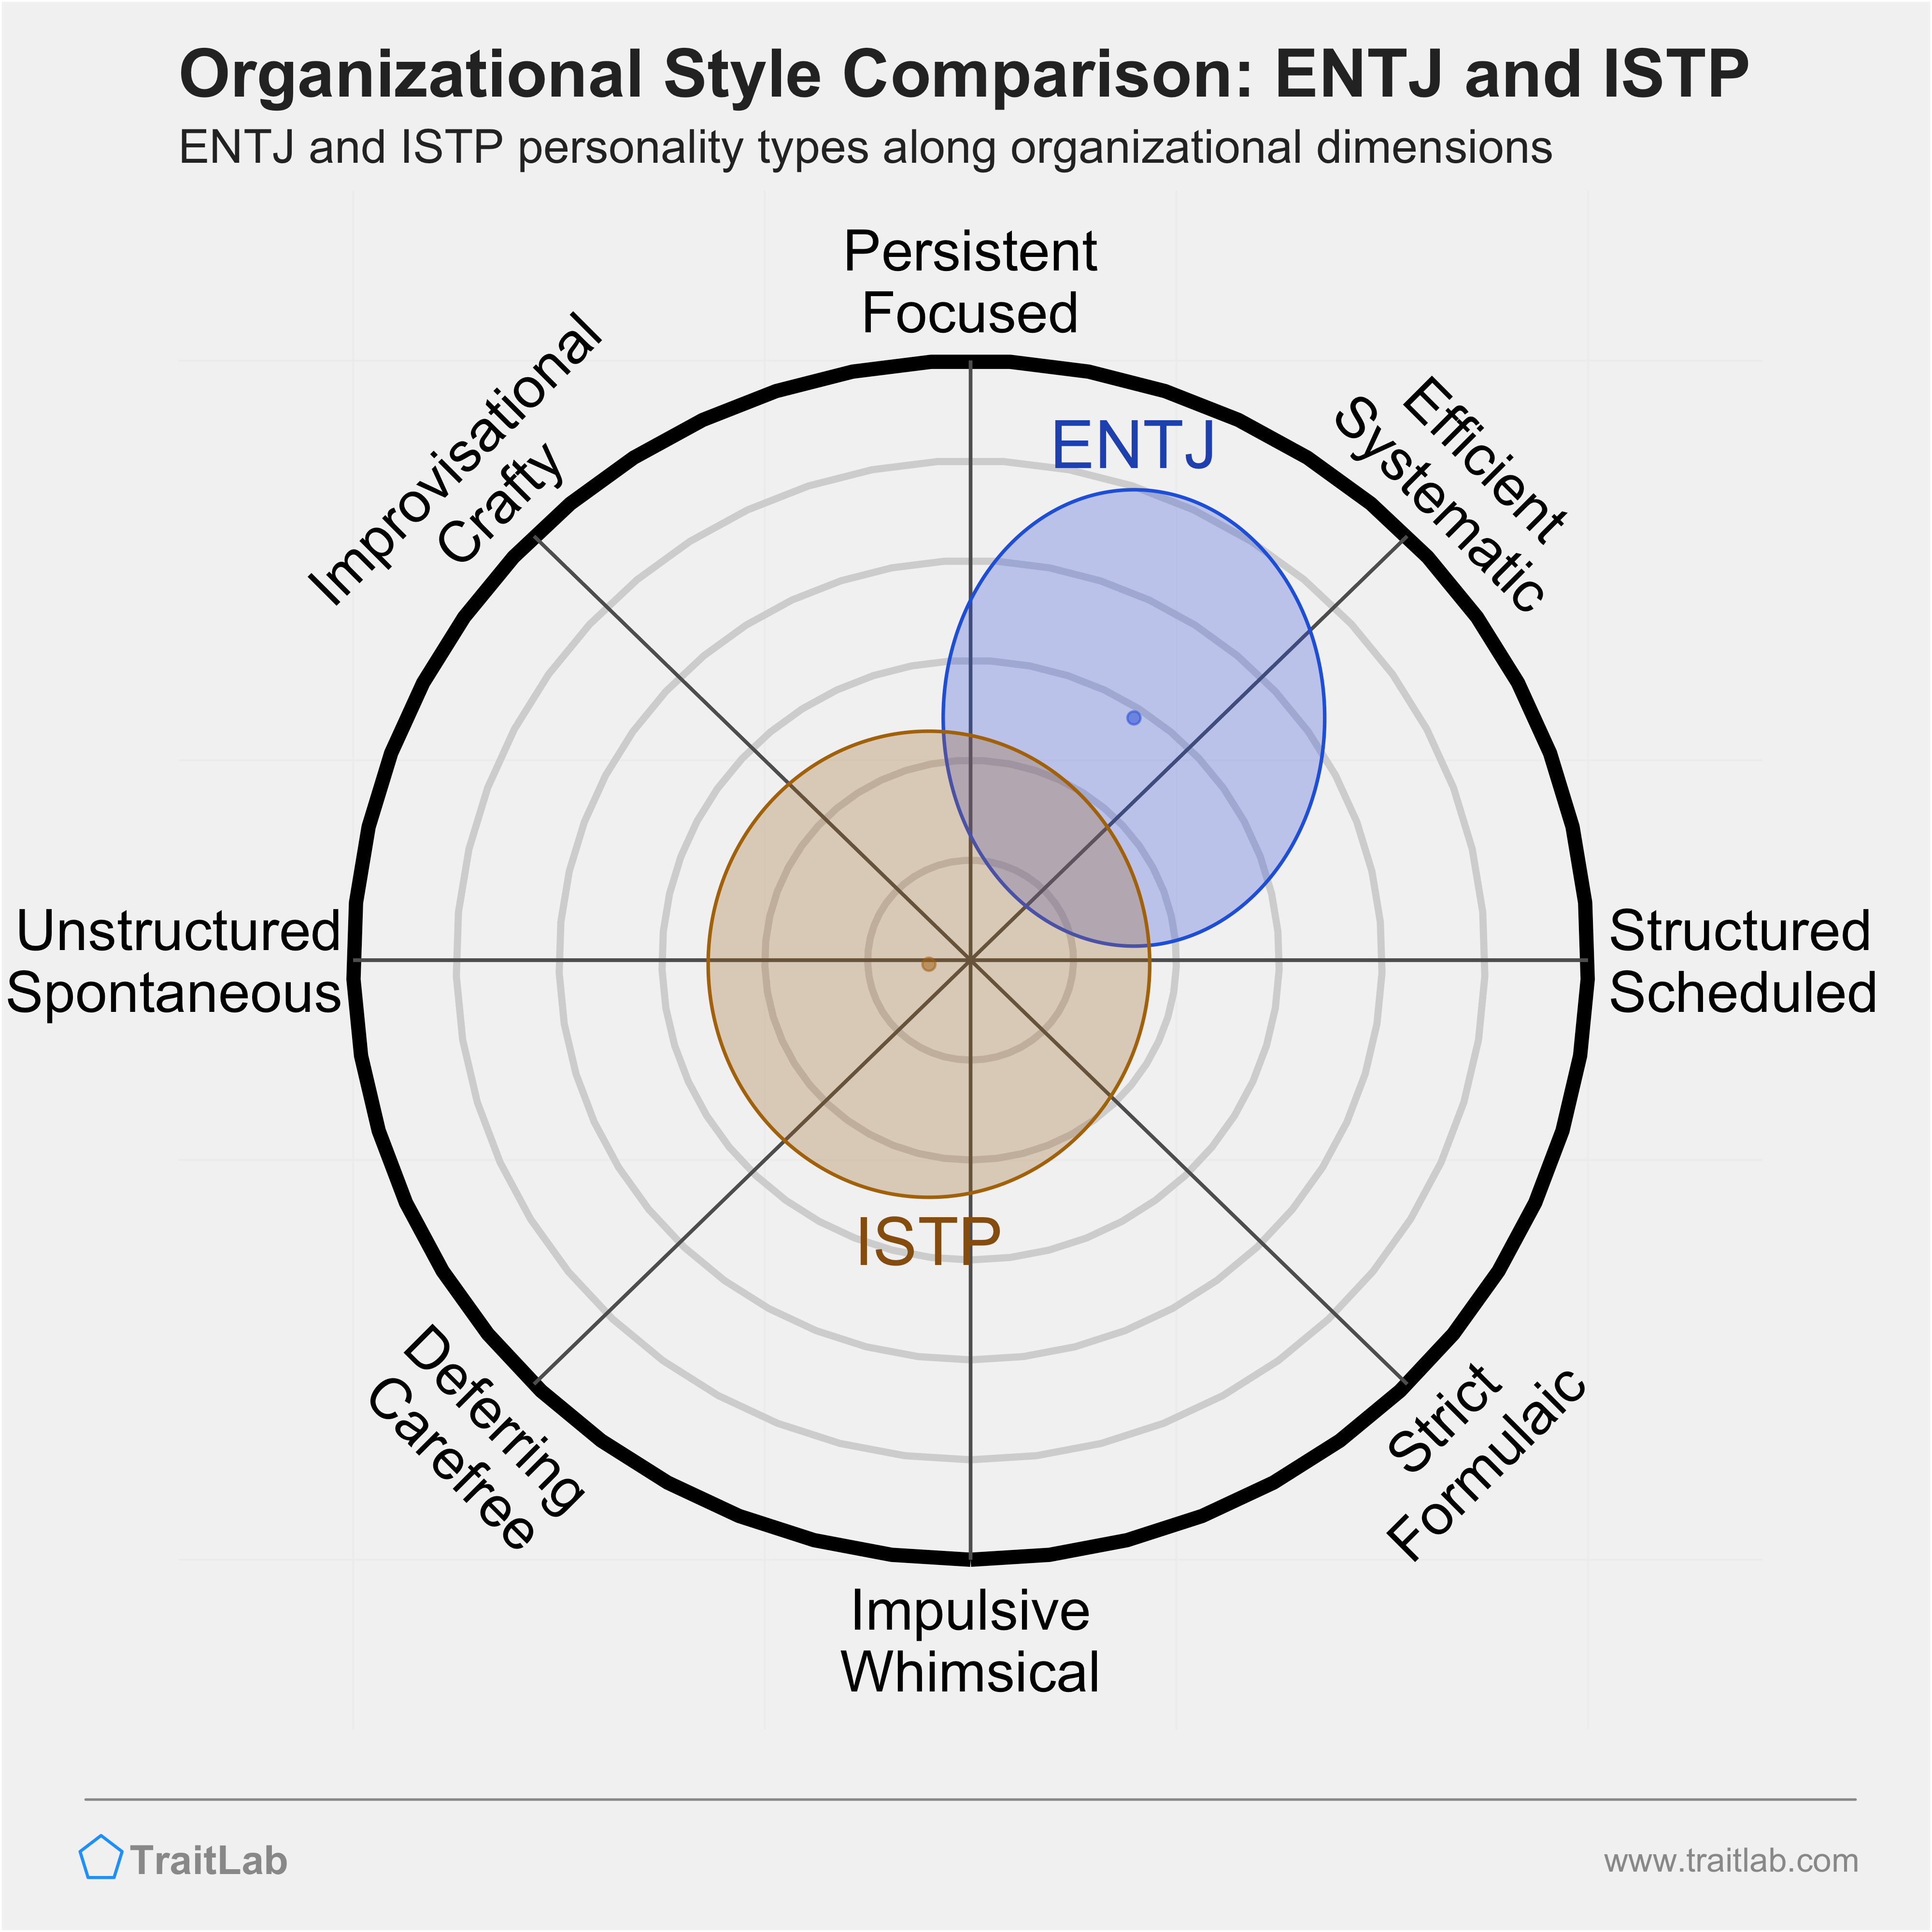 ENTJ and ISTP comparison across organizational dimensions